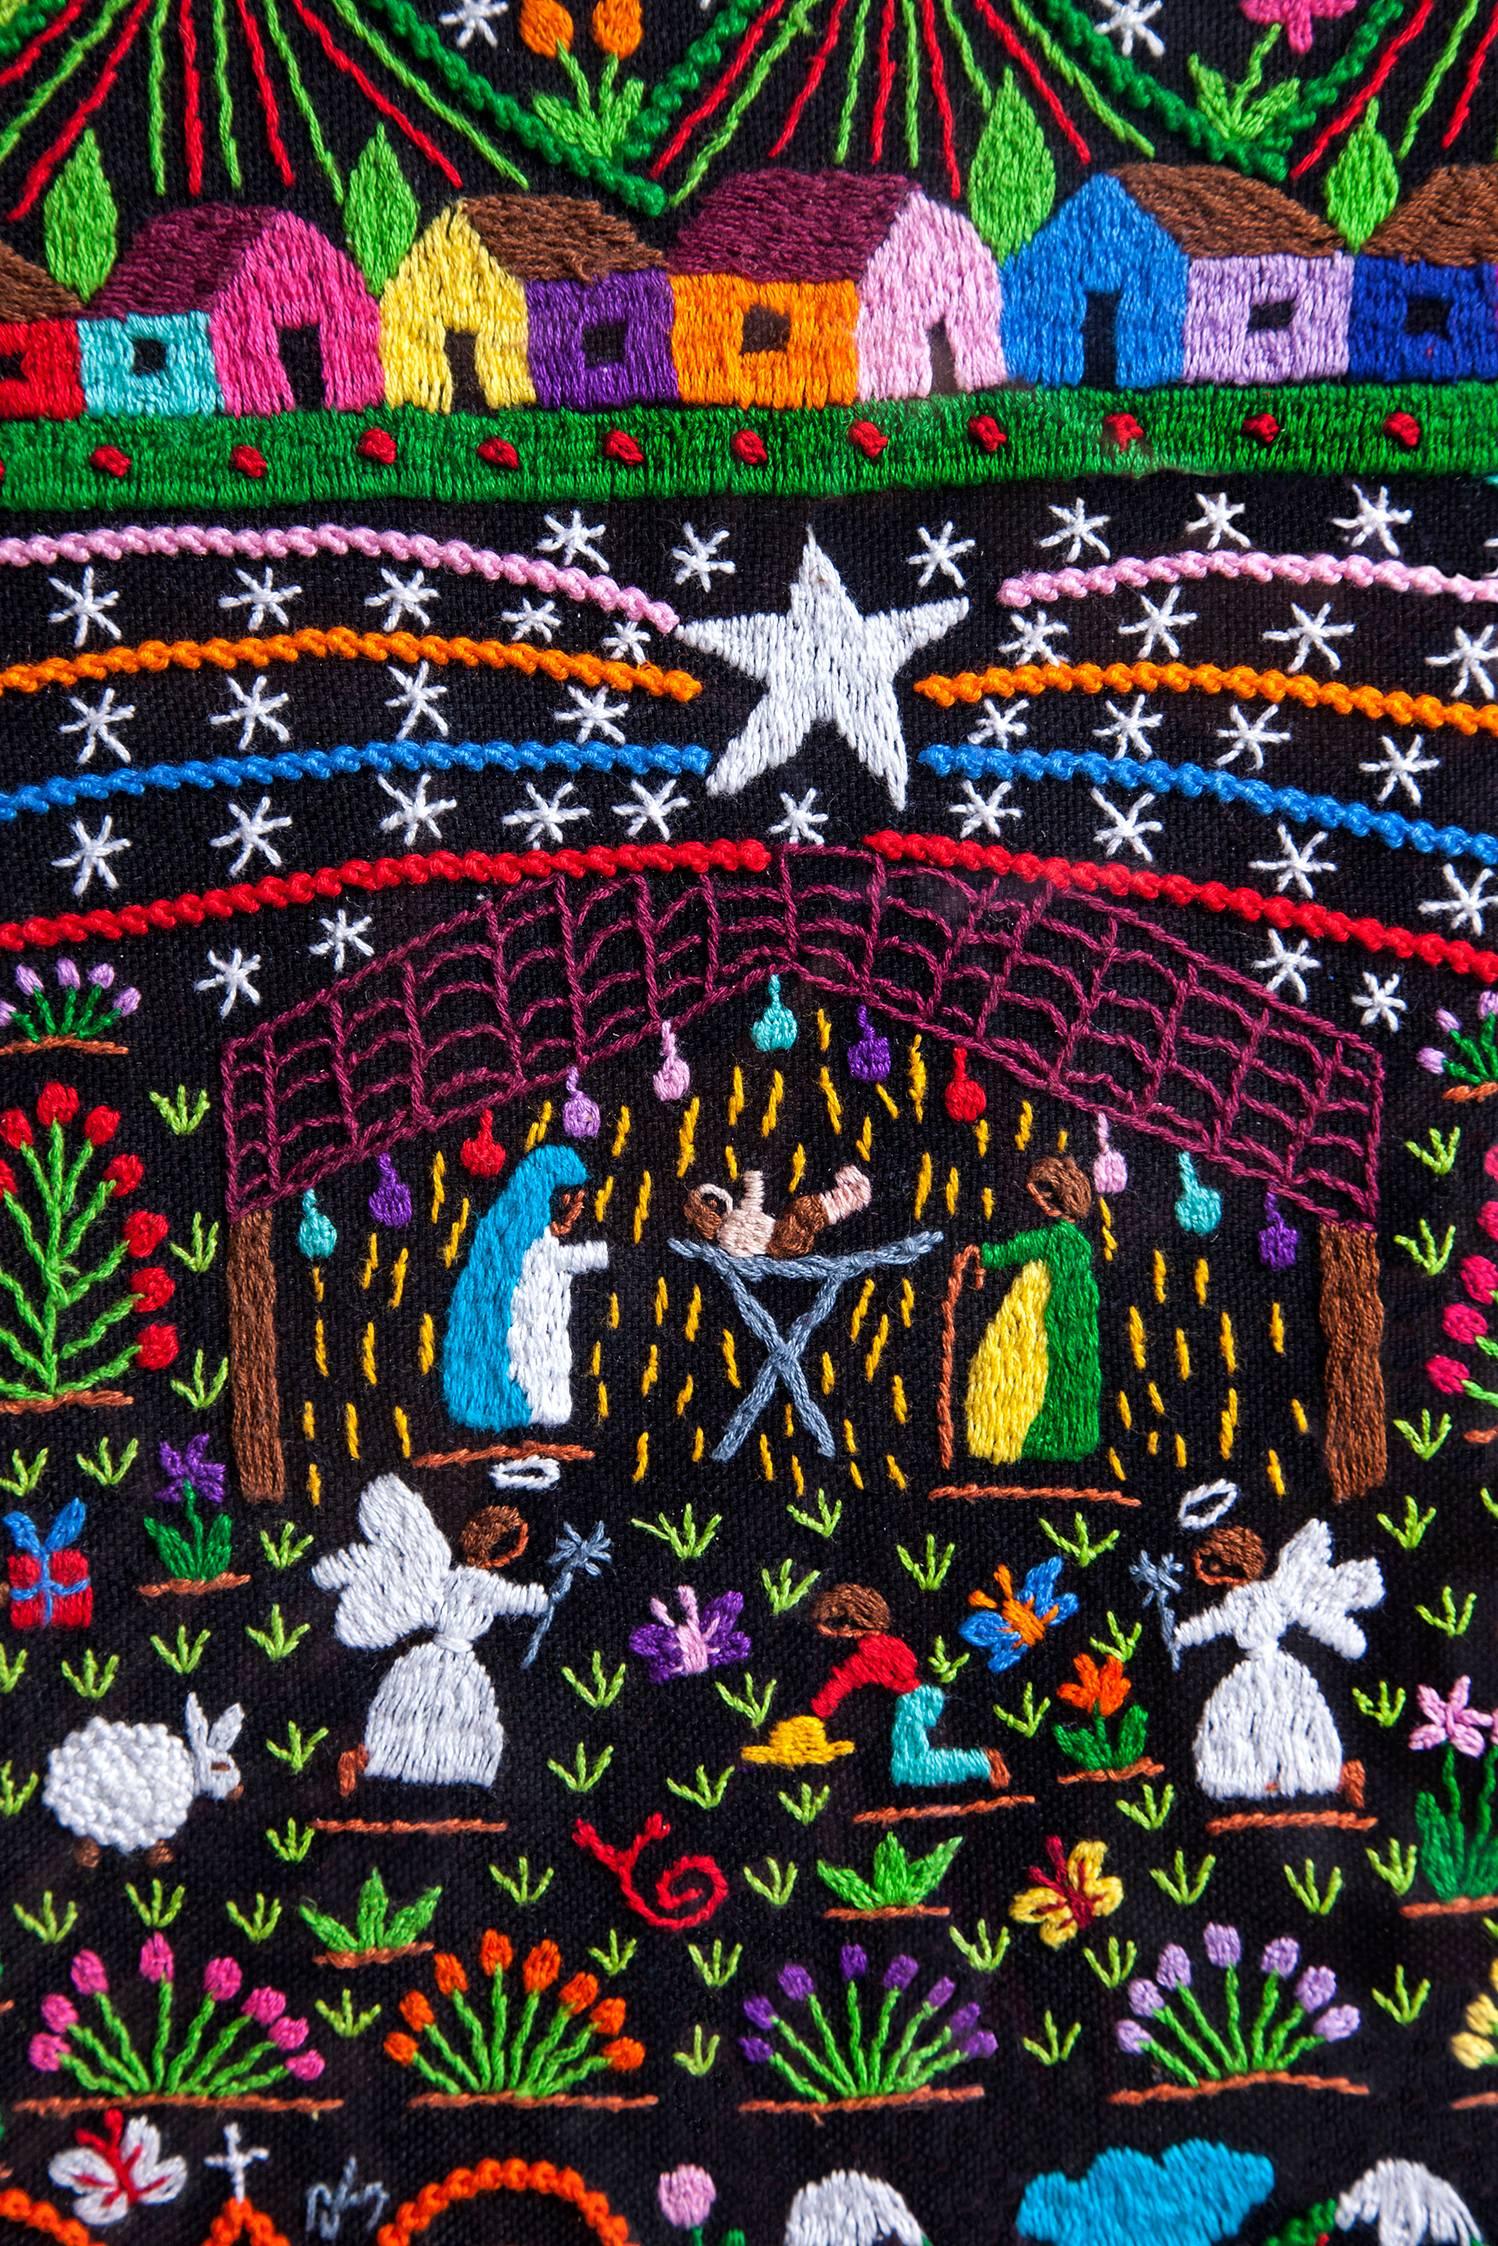 FREE SHIPPING TO WORLDWIDE!

Artisan: Maria Esther Barriga Tinoco

IAM 1st. Place “Textiles” Category Cotton Embroidery
INSTITUTO DEL ARTESANO MICHOACANO LVII State Edition Award 